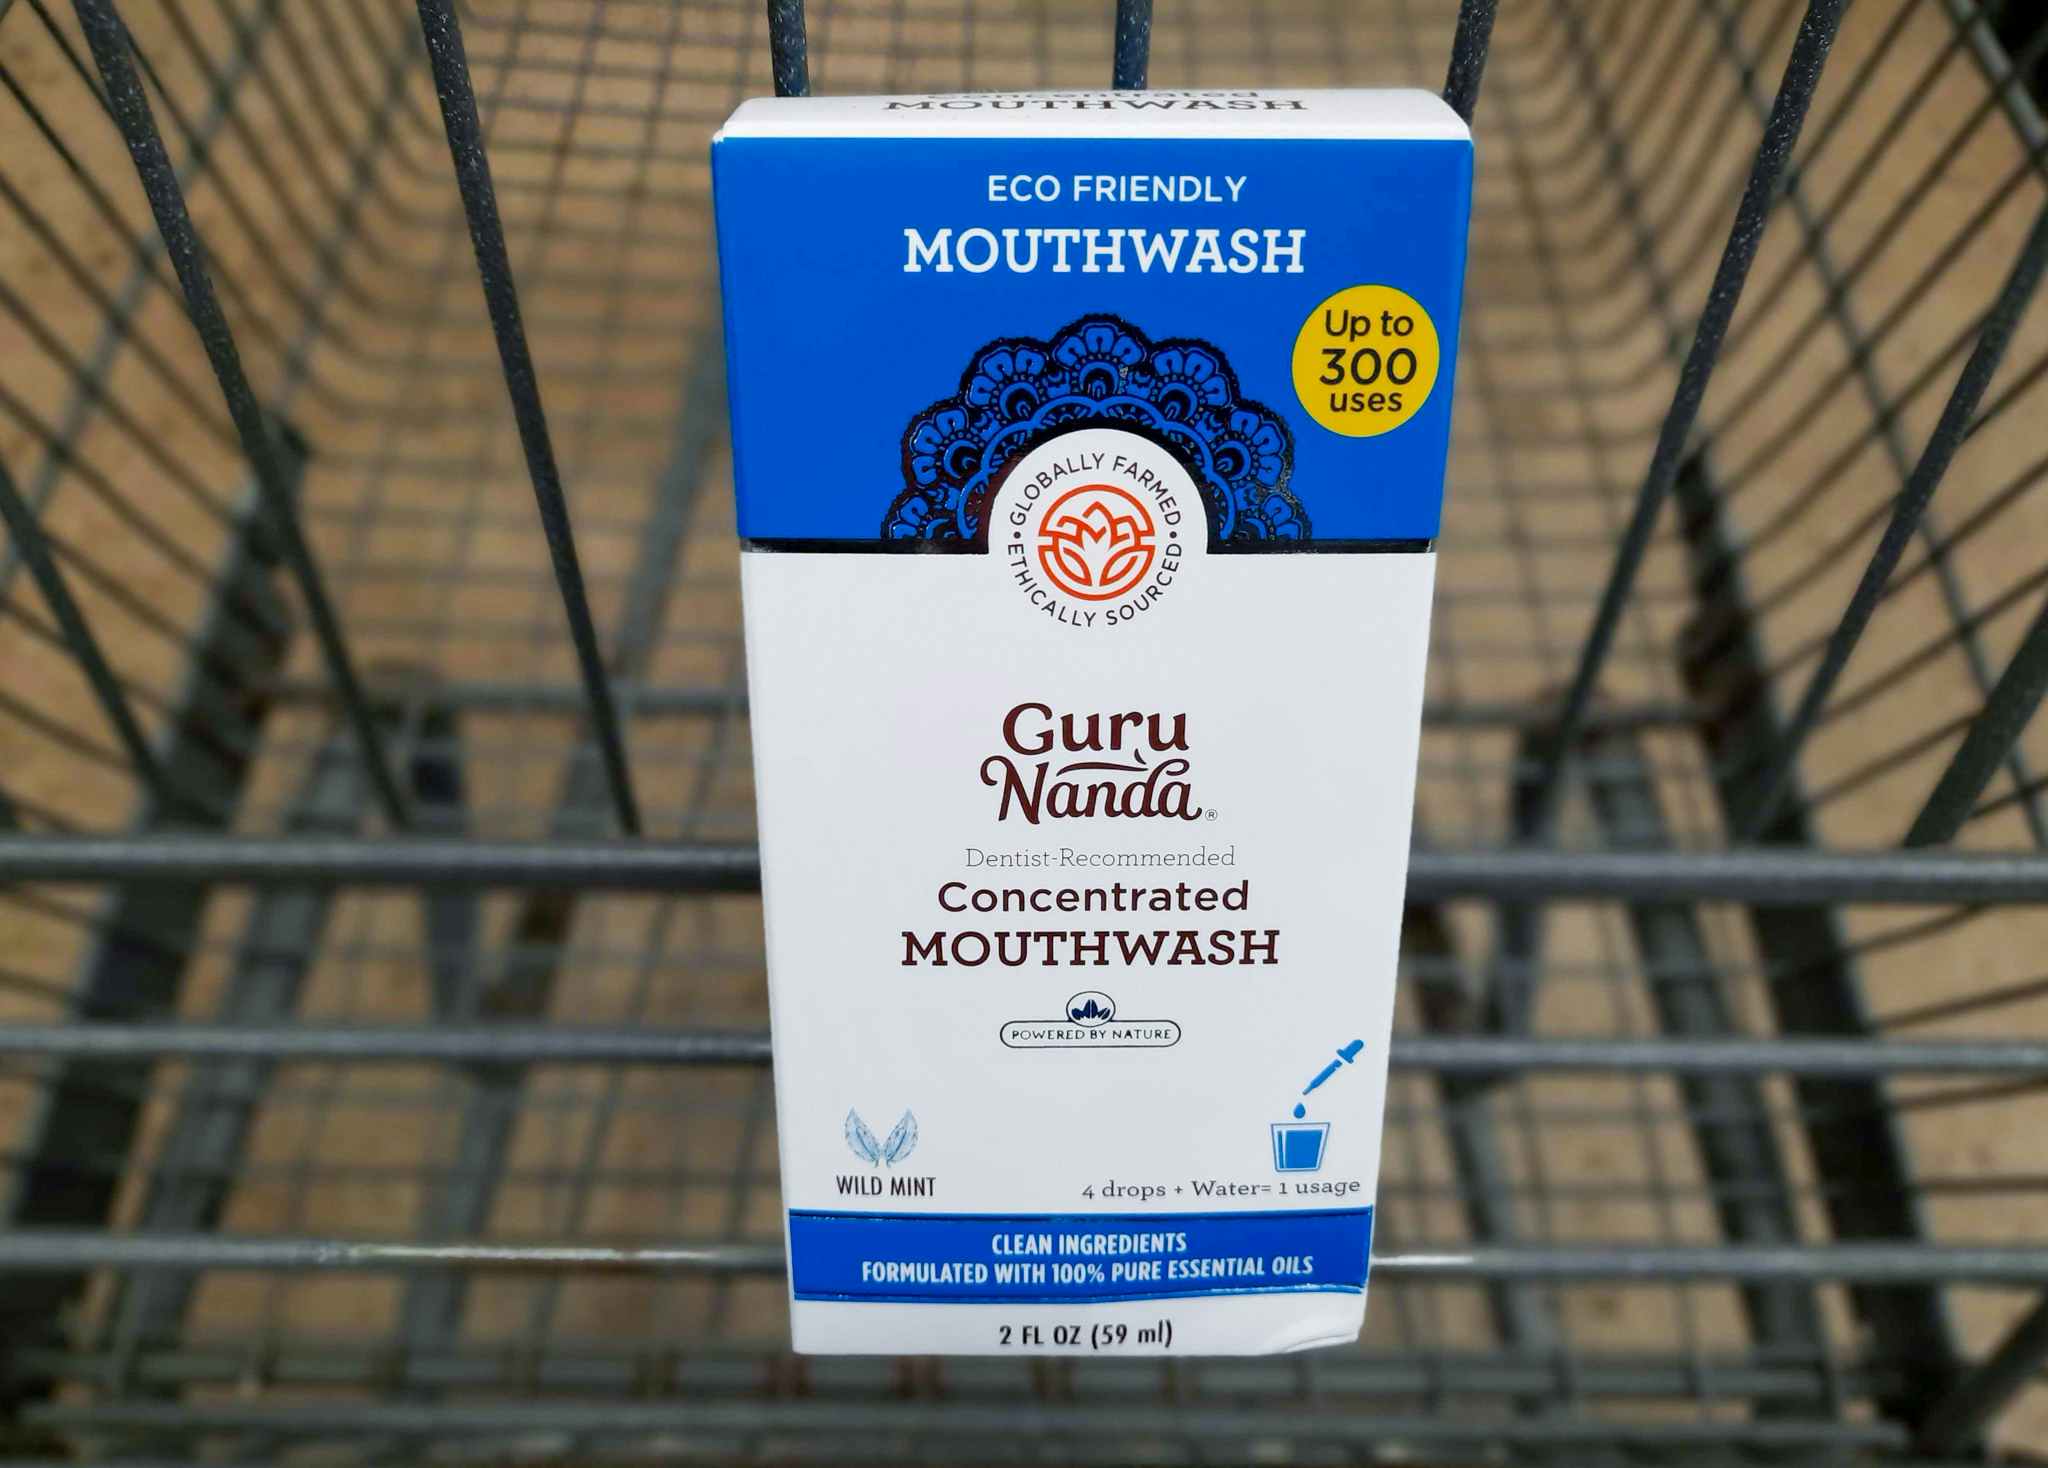 GuruNanda Concentrated Mouthwash product in Walmart shopping cart